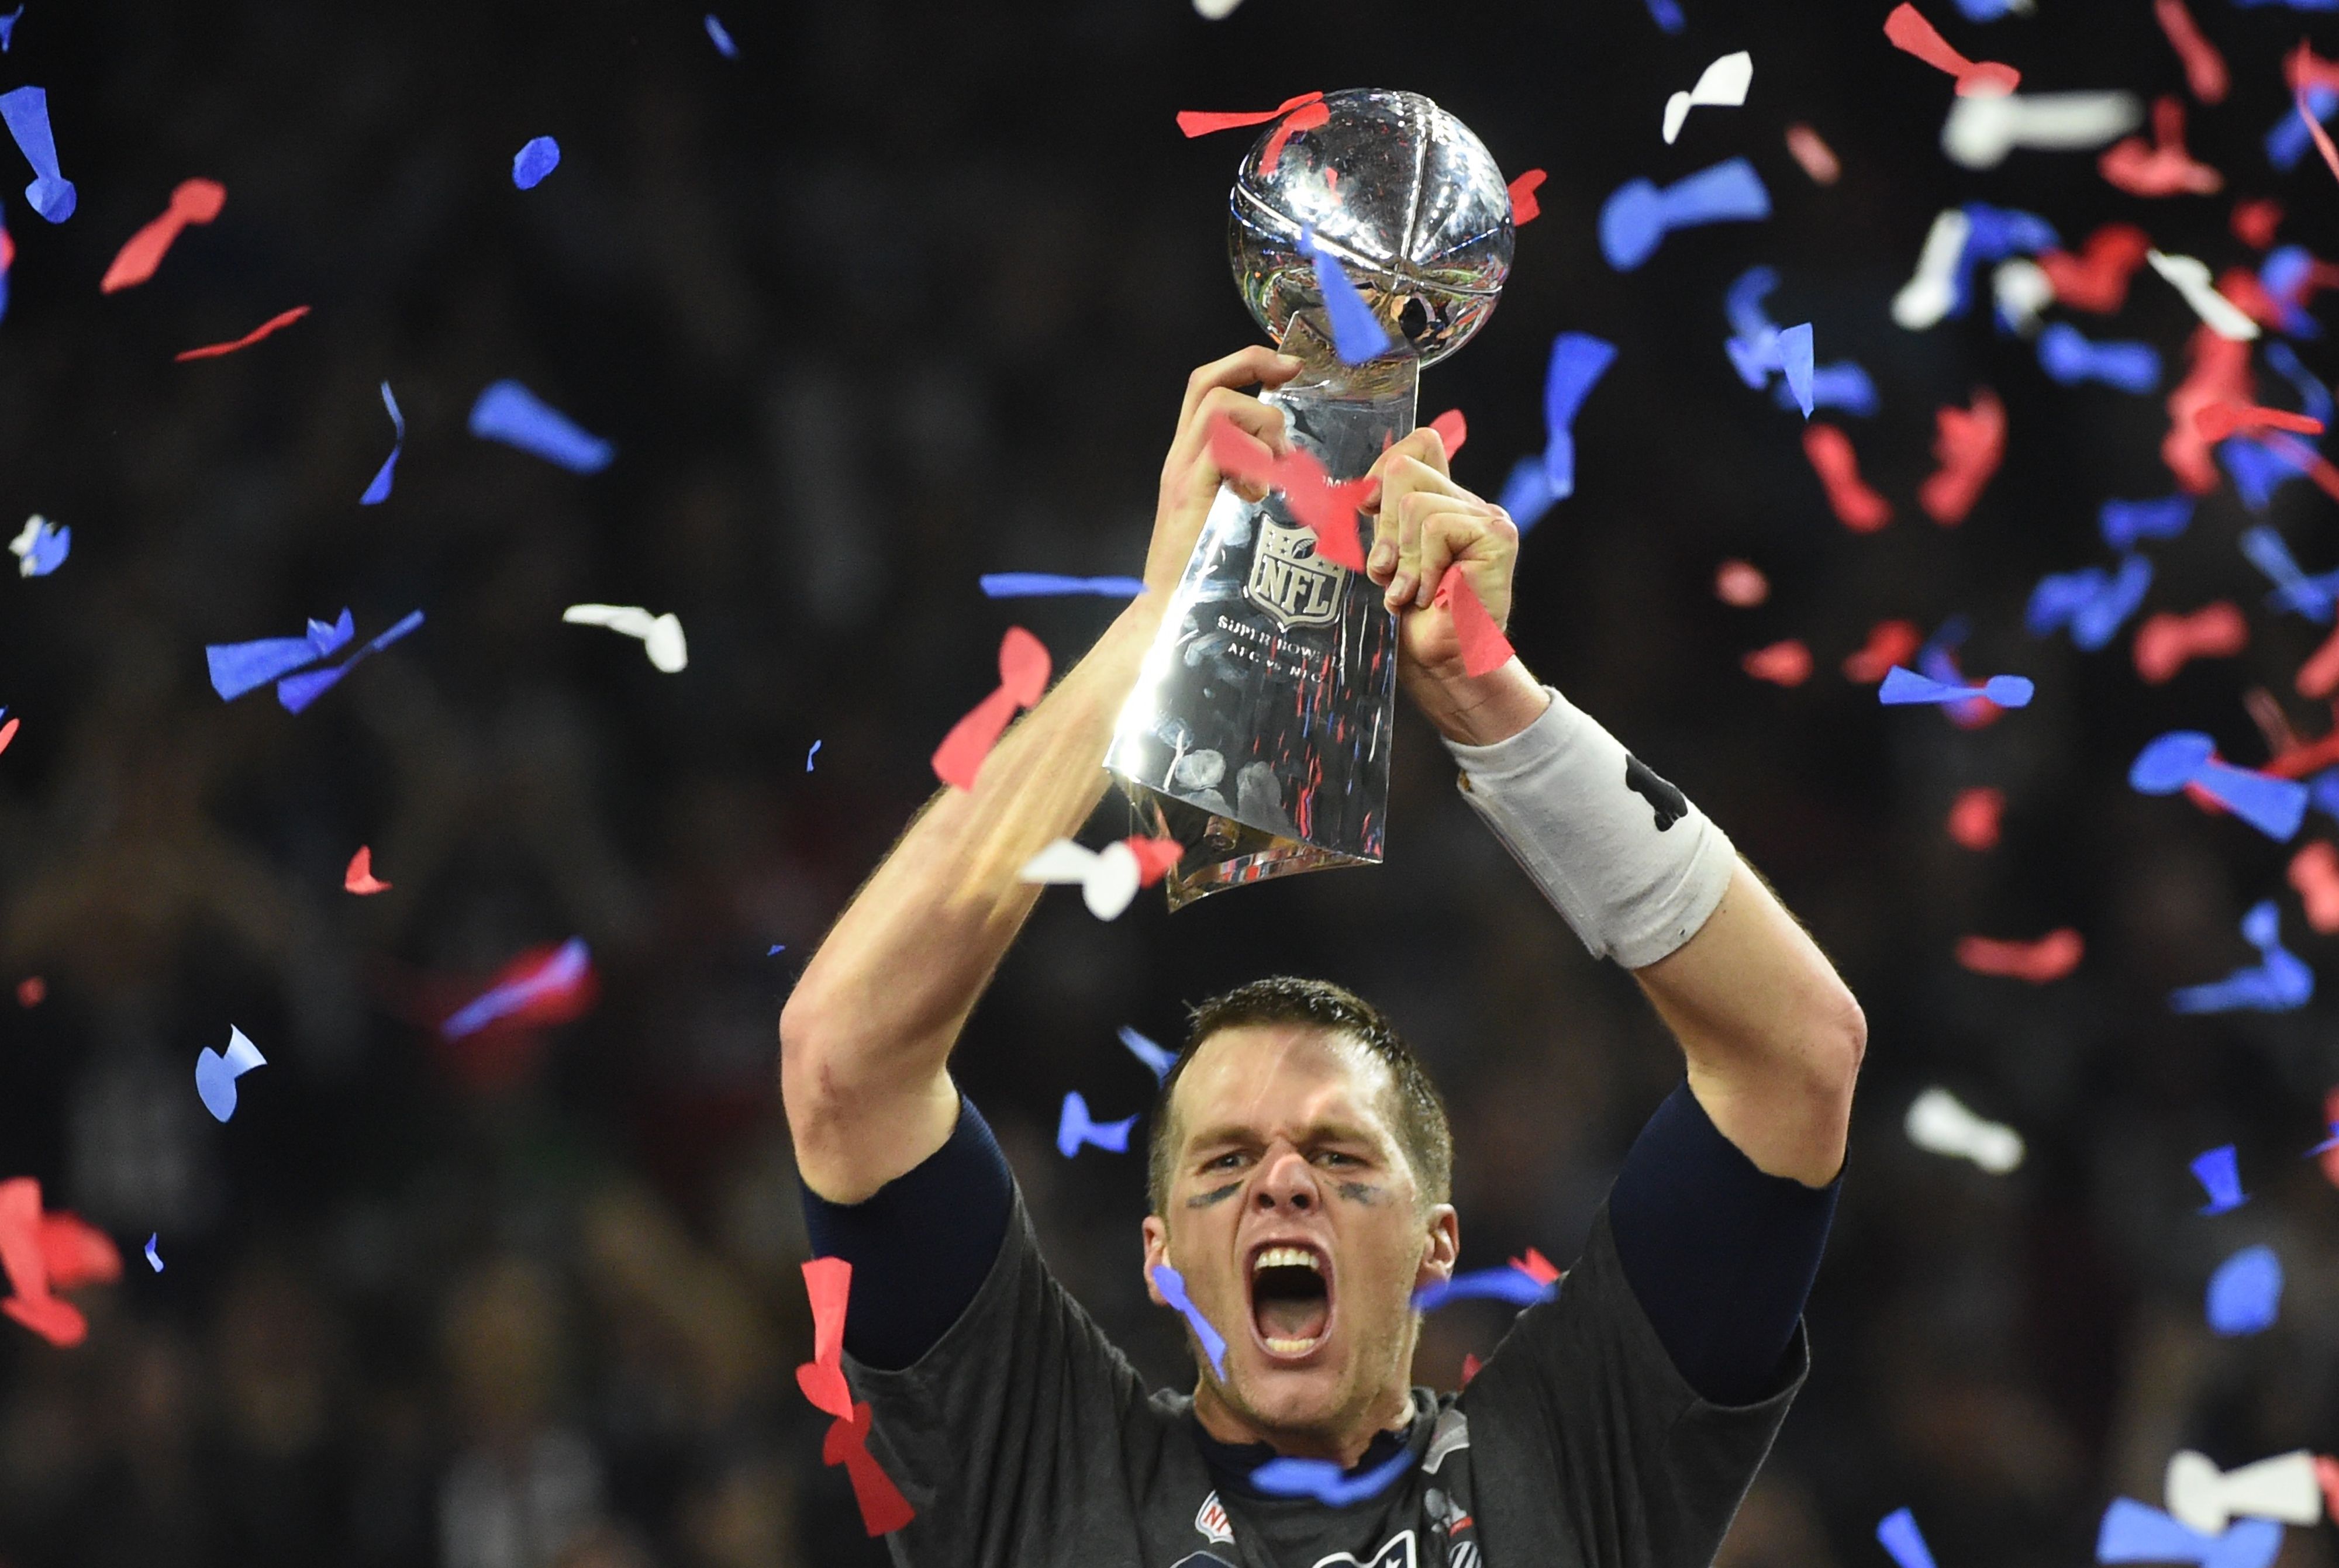 Tom Brady raises the Lombardi Trophy after winning Super Bowl 52.